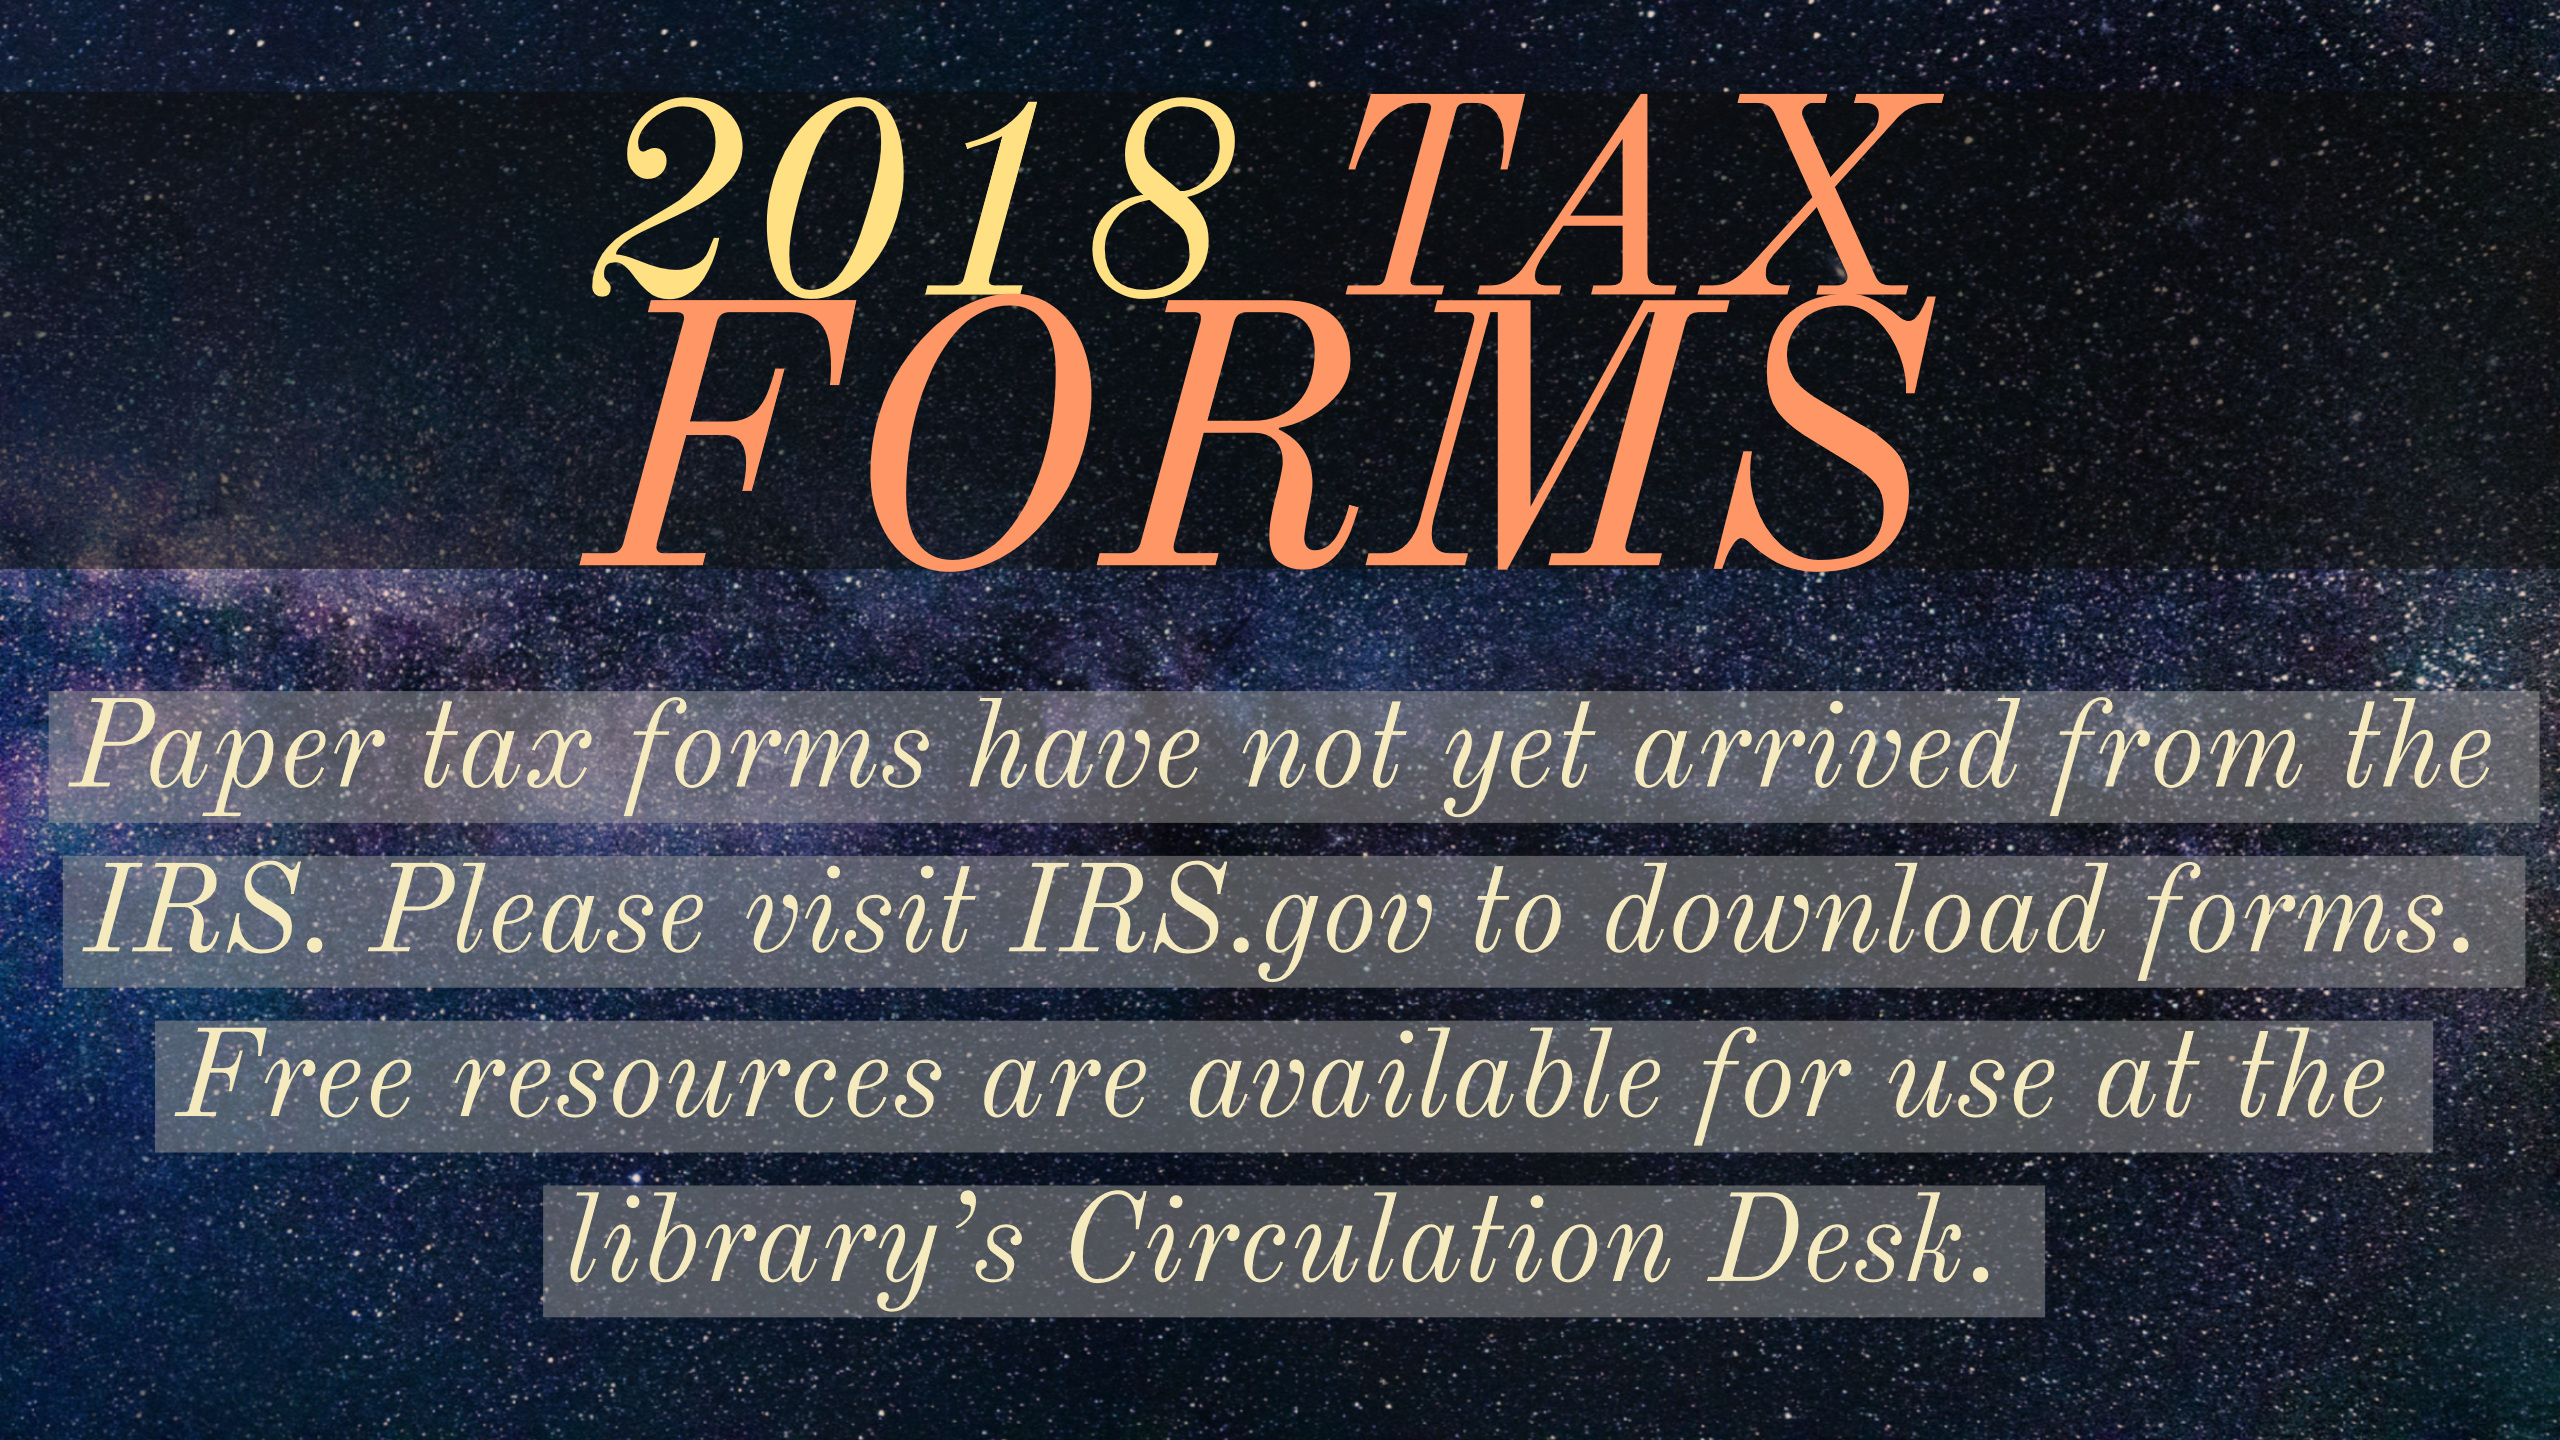 2018 Tax Forms.jpg